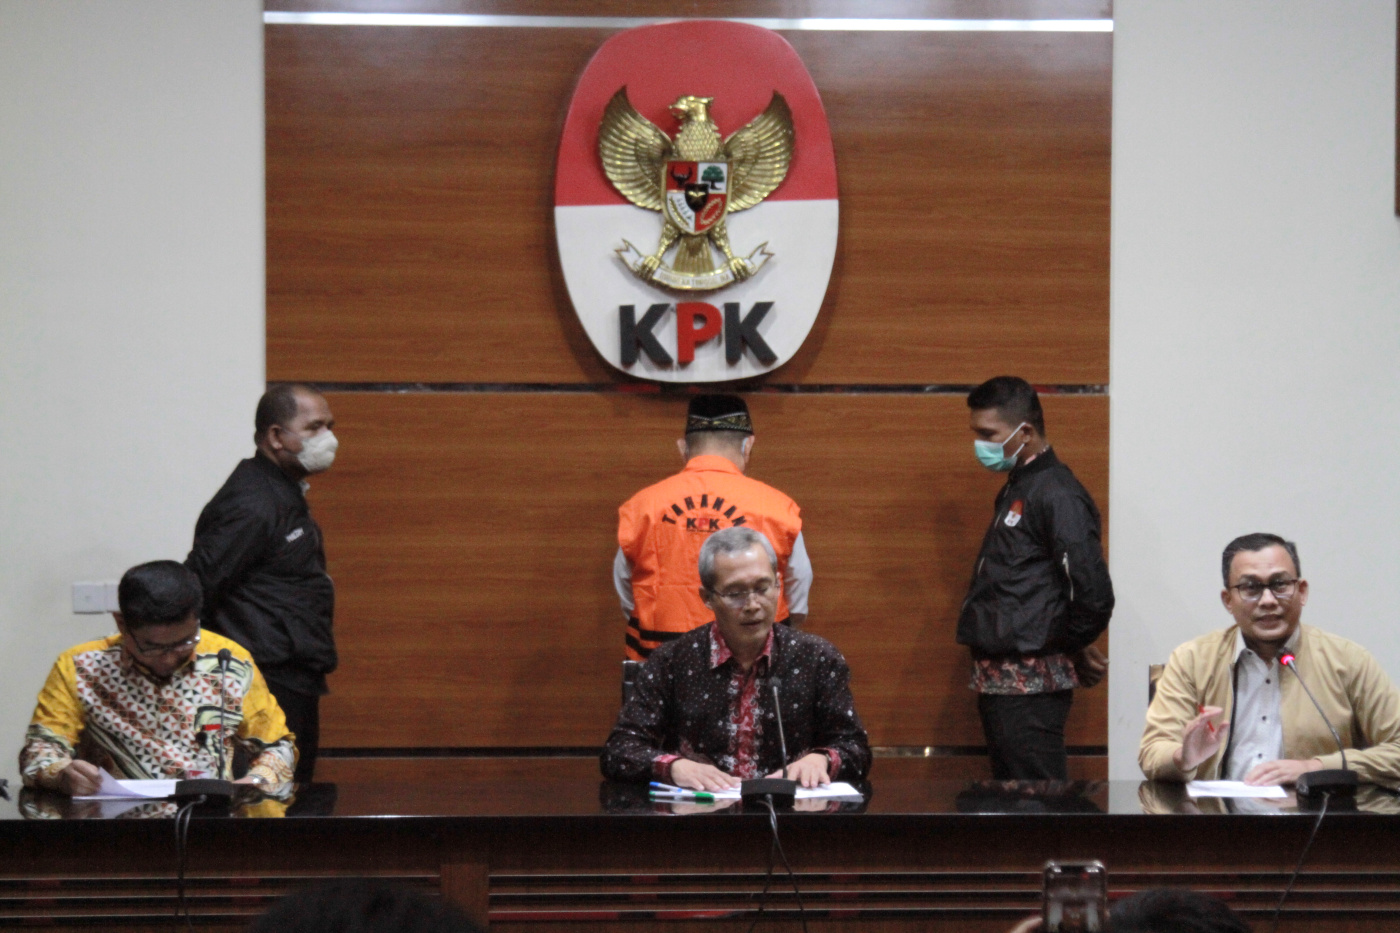 Mantan Bupati Sidoarjo Syaifullah resmi di tahan KPK terkait kasus gratifikasi di kalangan Pemkab Sidoarjo sebesar Rp 15 miliar (Ashar/SinPo.id)